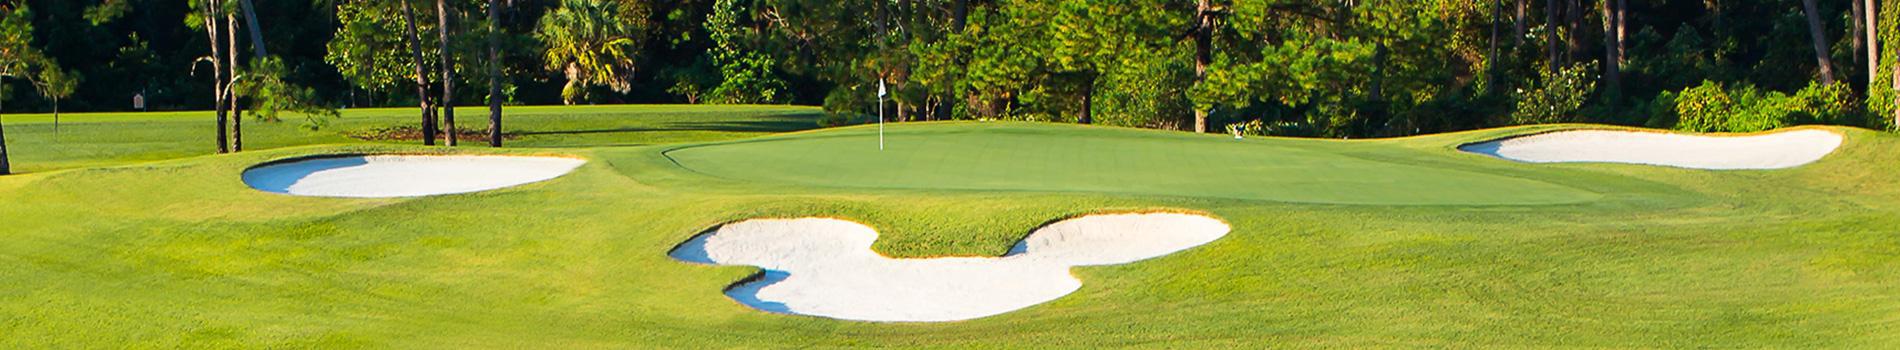 Golf Rates Public Golf Course In Orlando Fl